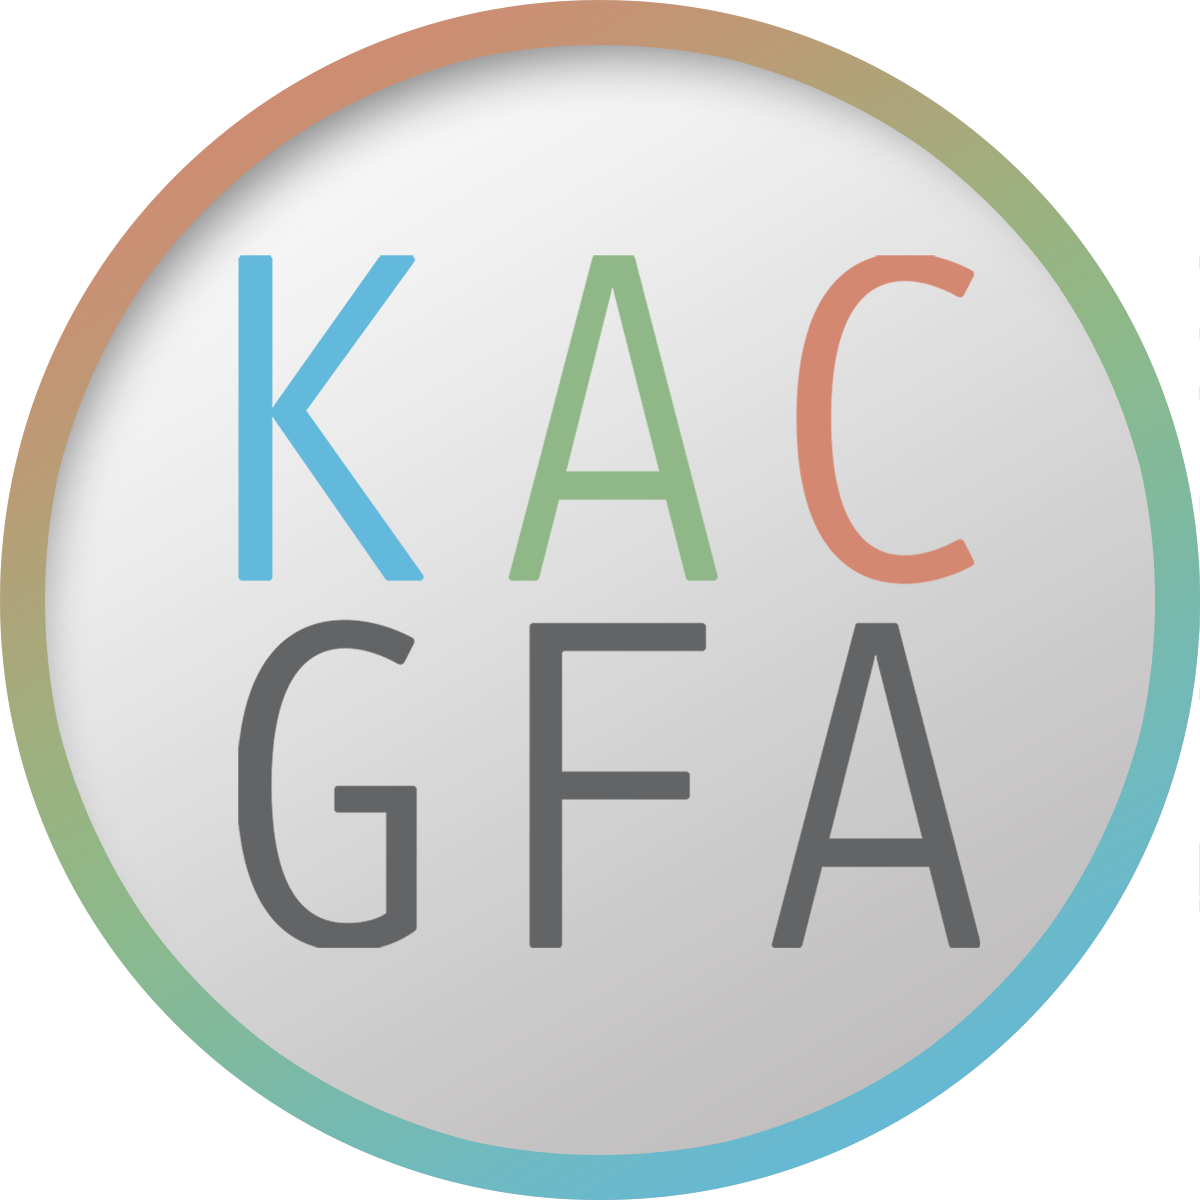 kac-gfa-logo-circle-1200 copy.png